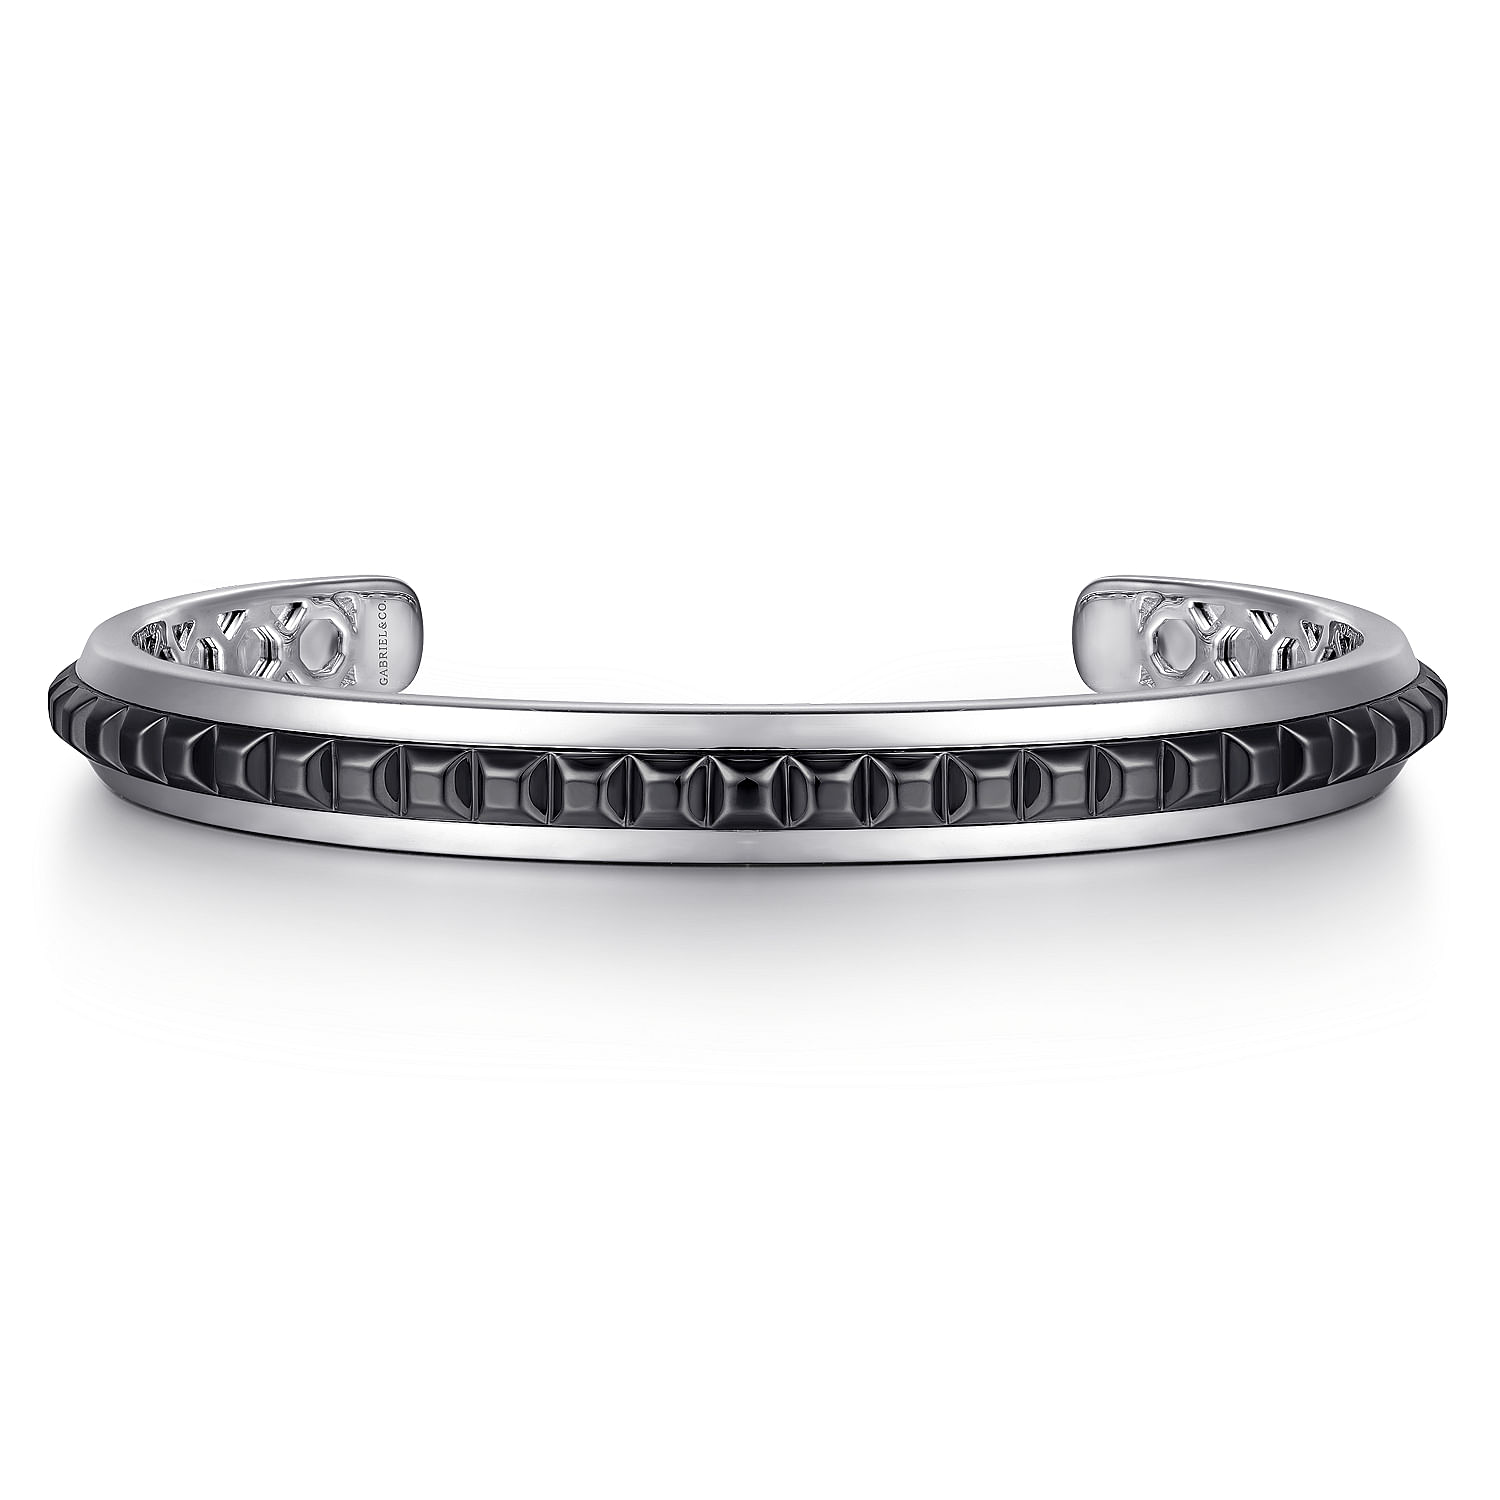 925 Sterling Silver Open Cuff Bracelet with Black Grommets